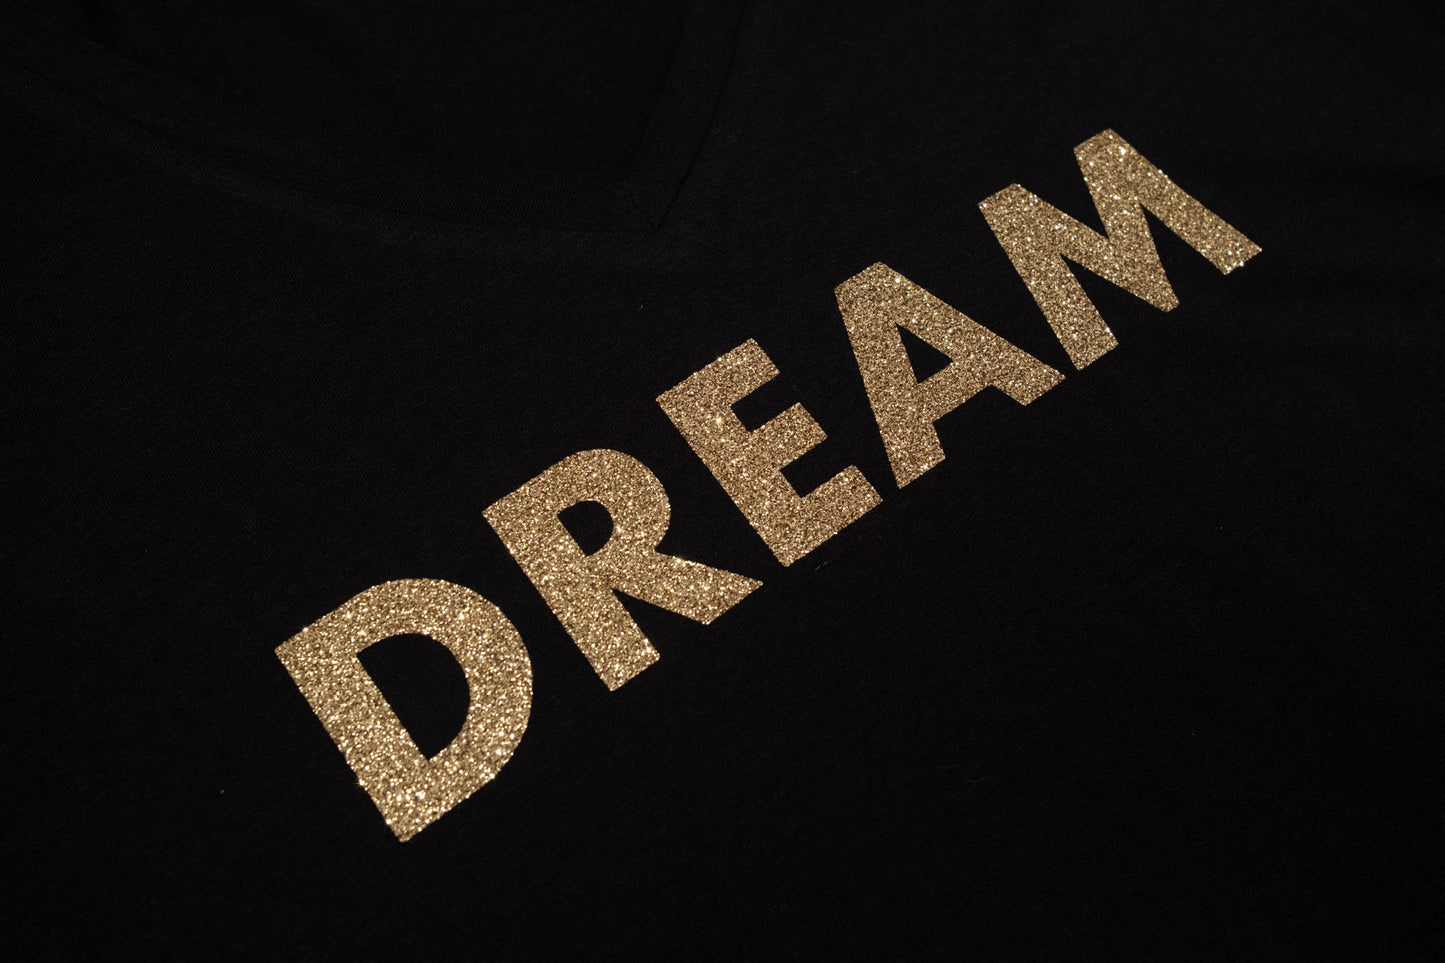 Mimi DREAM SHORT sleeved t-shirt